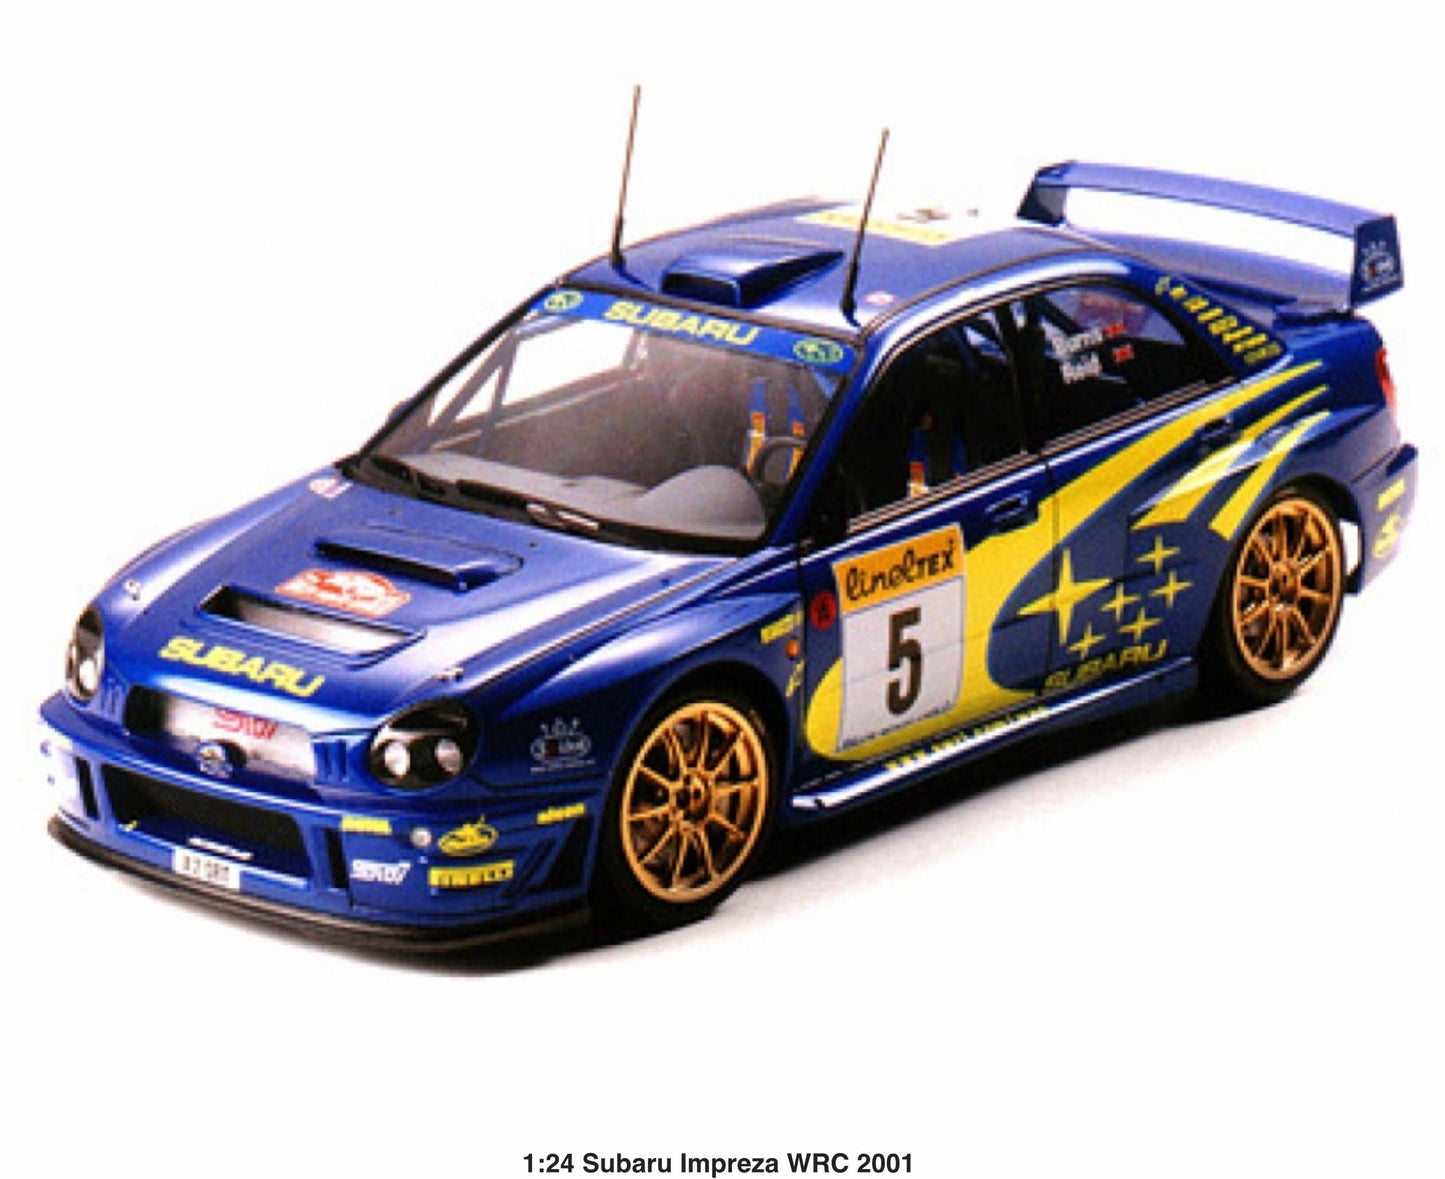 SUBARU IMPREZA WRC - RALLY MONTE CARLO 2001